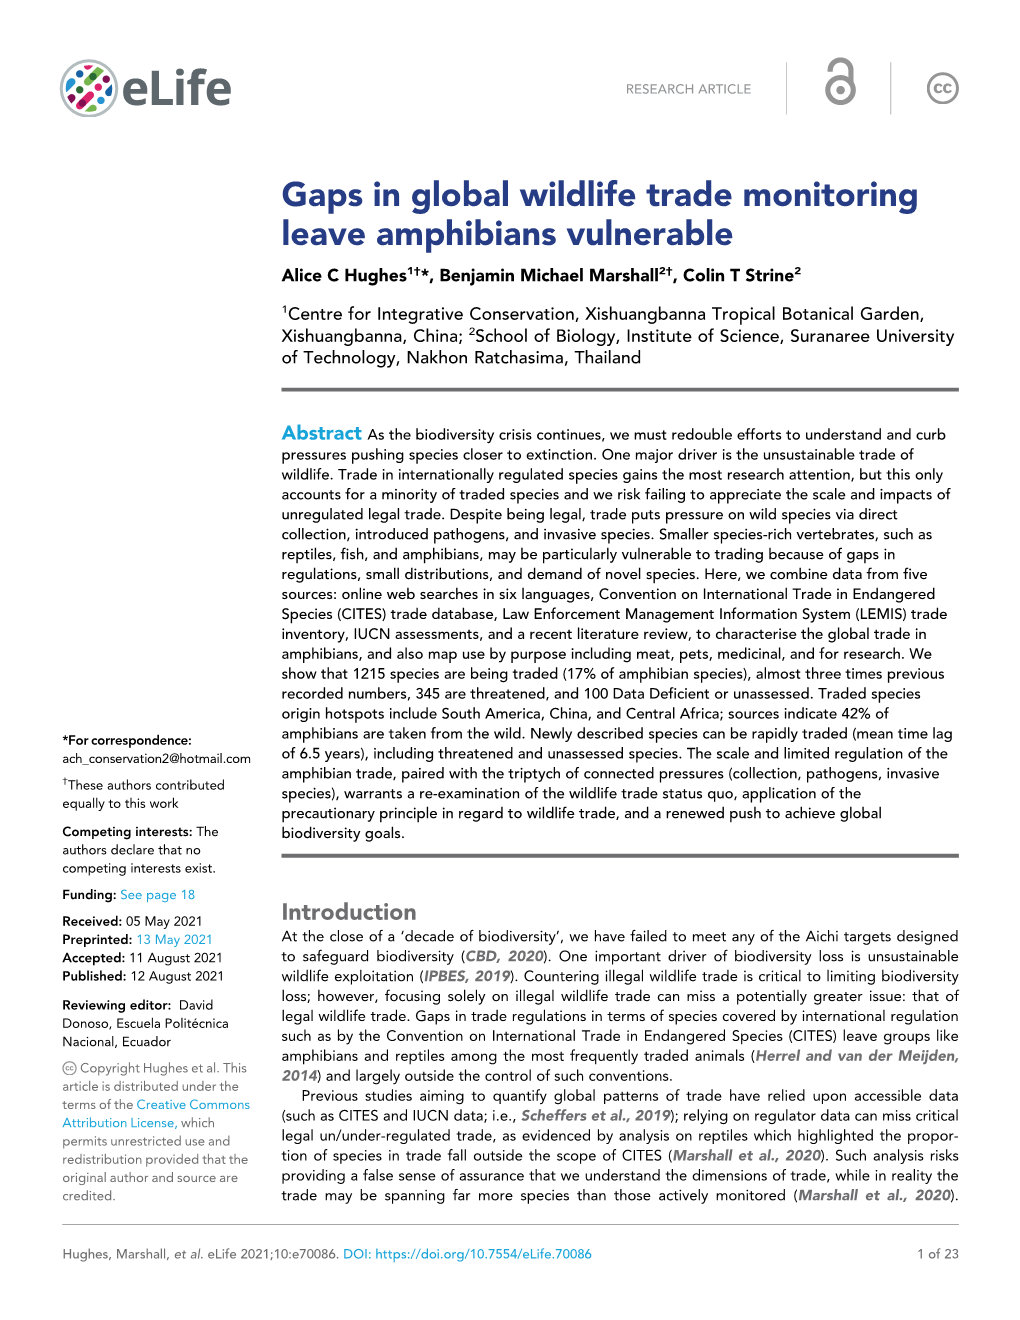 Gaps in Global Wildlife Trade Monitoring Leave Amphibians Vulnerable Alice C Hughes1†*, Benjamin Michael Marshall2†, Colin T Strine2